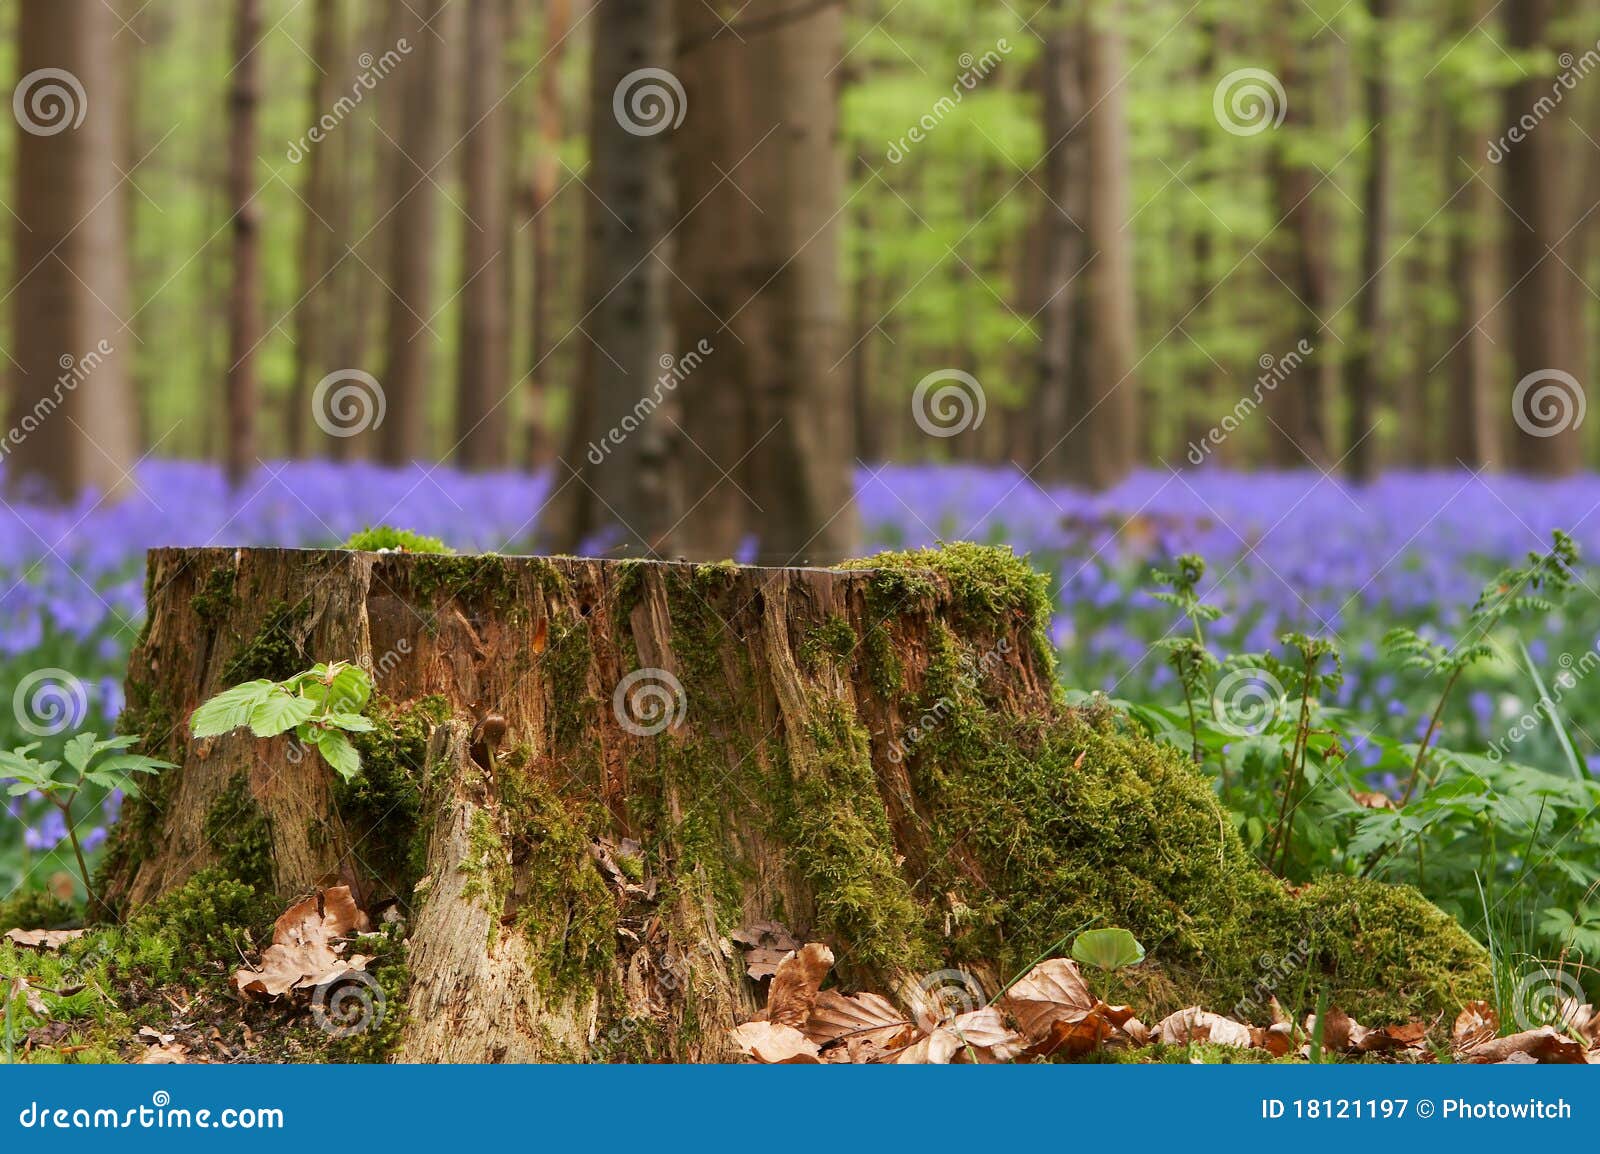 tree stump in springtime